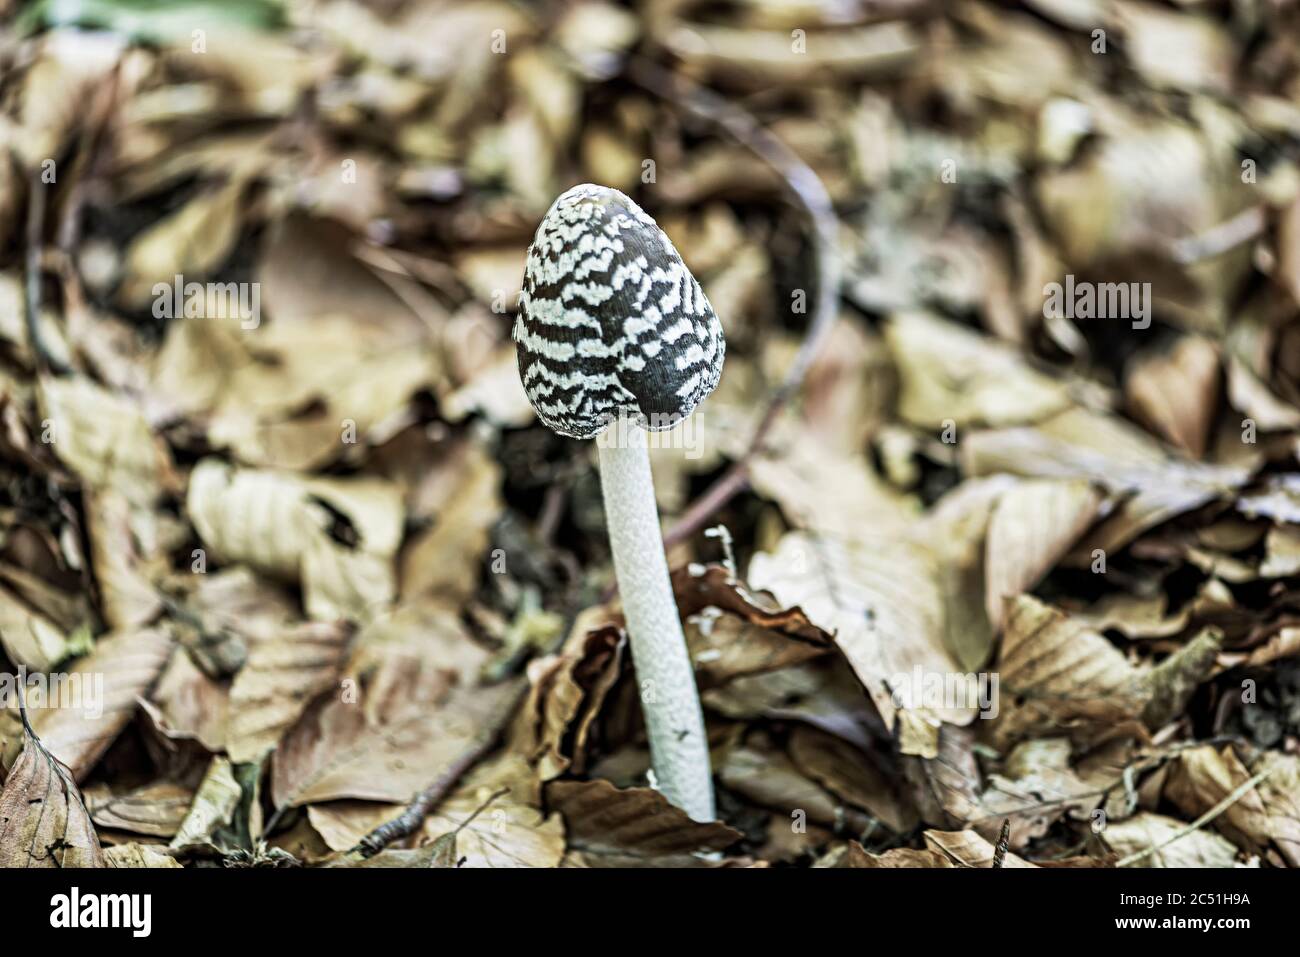 Coprinus picaceus, inedible but beautiful and elegant mushroom. Stock Photo